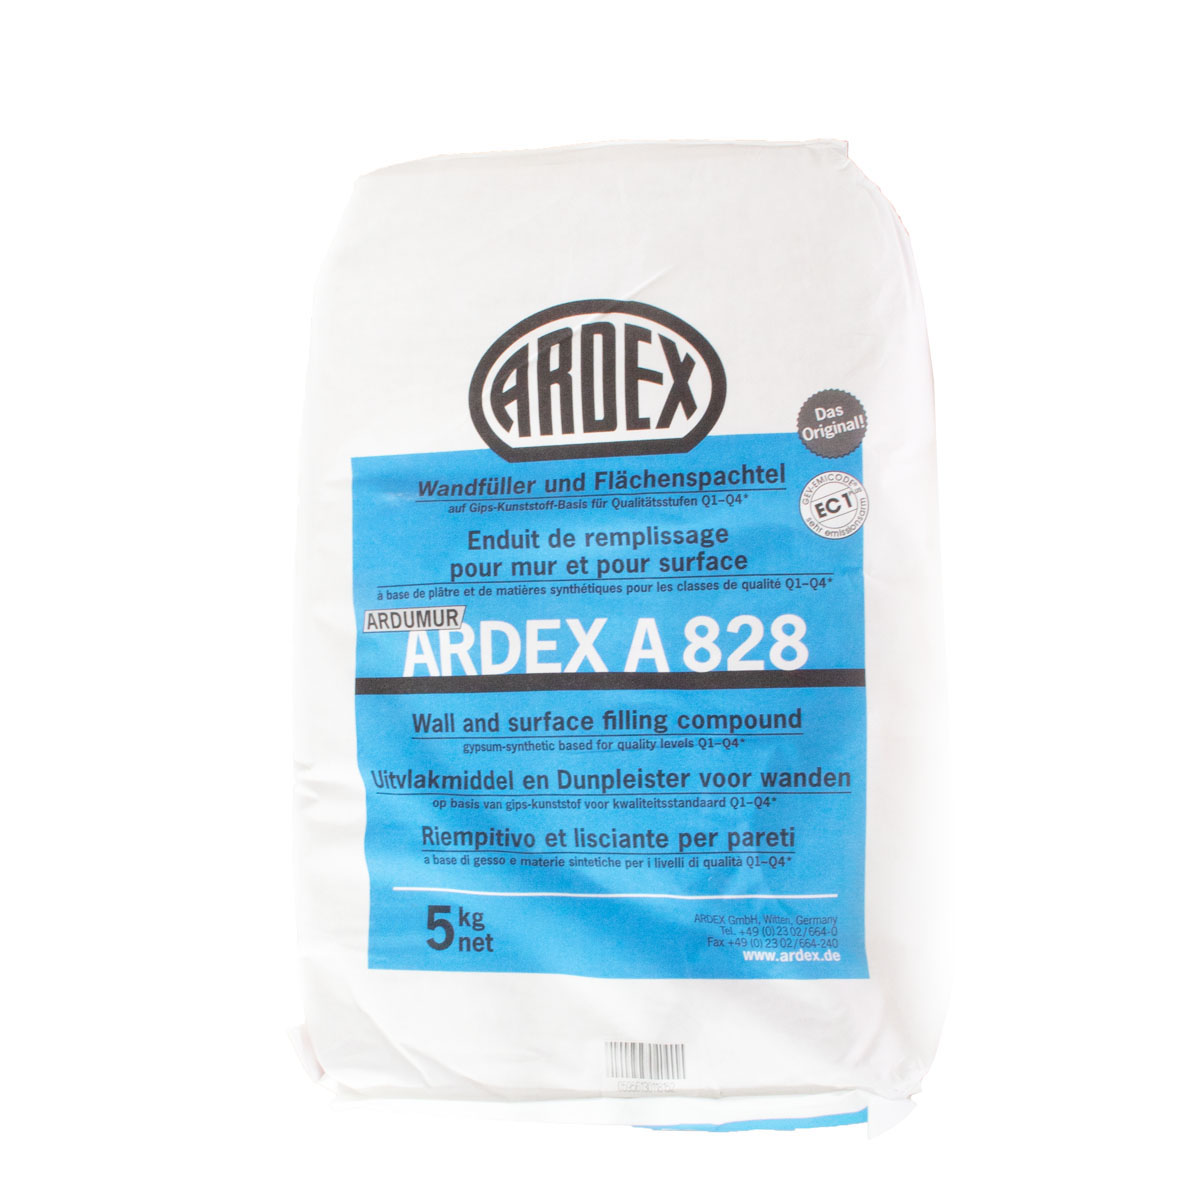 Ardex A828 5kg, Wandfüller, Wandspachtel, Ardumur, Q1-Q4